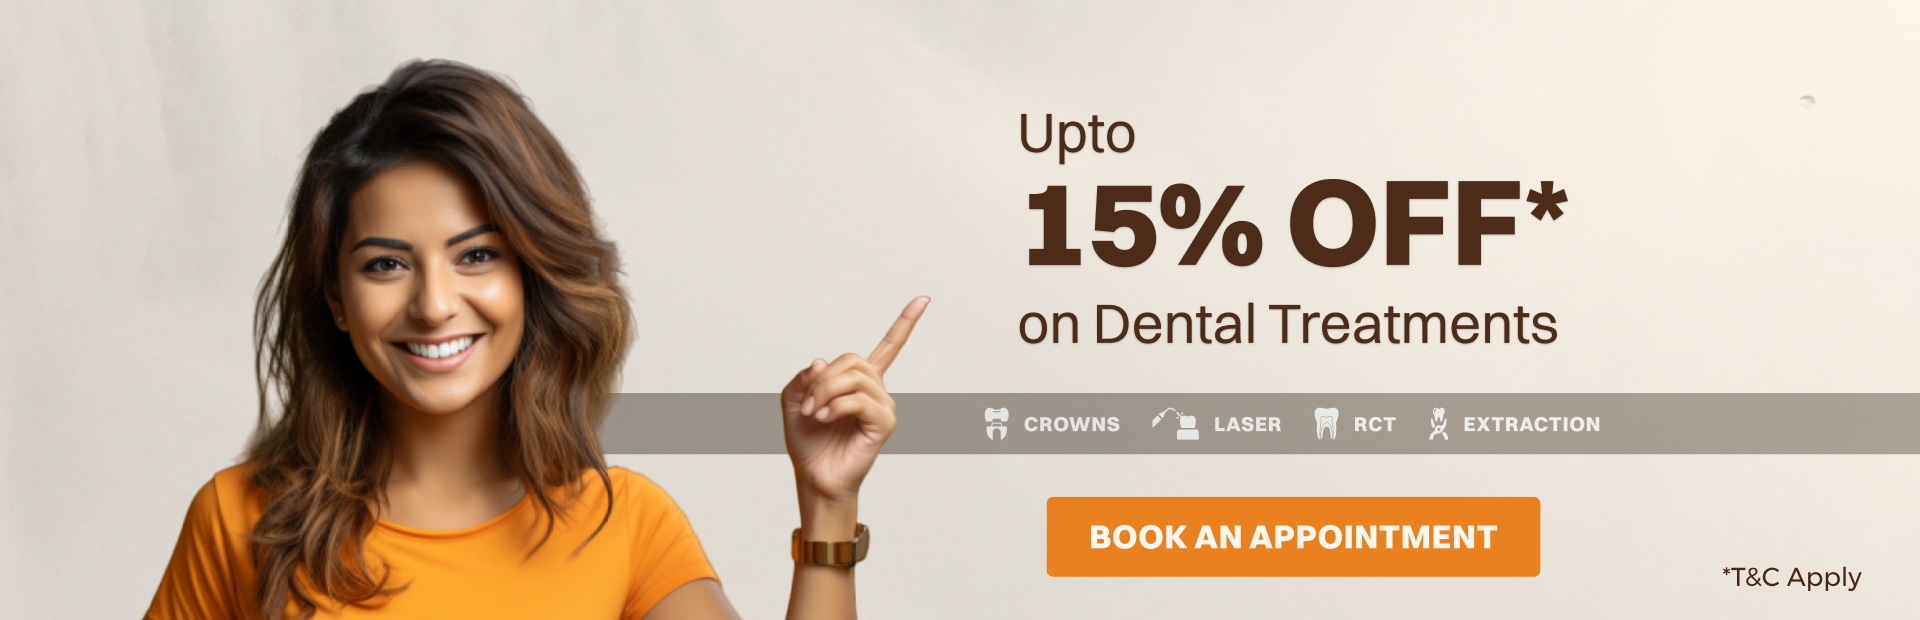 Dental Treatment Offers by Clove Dental